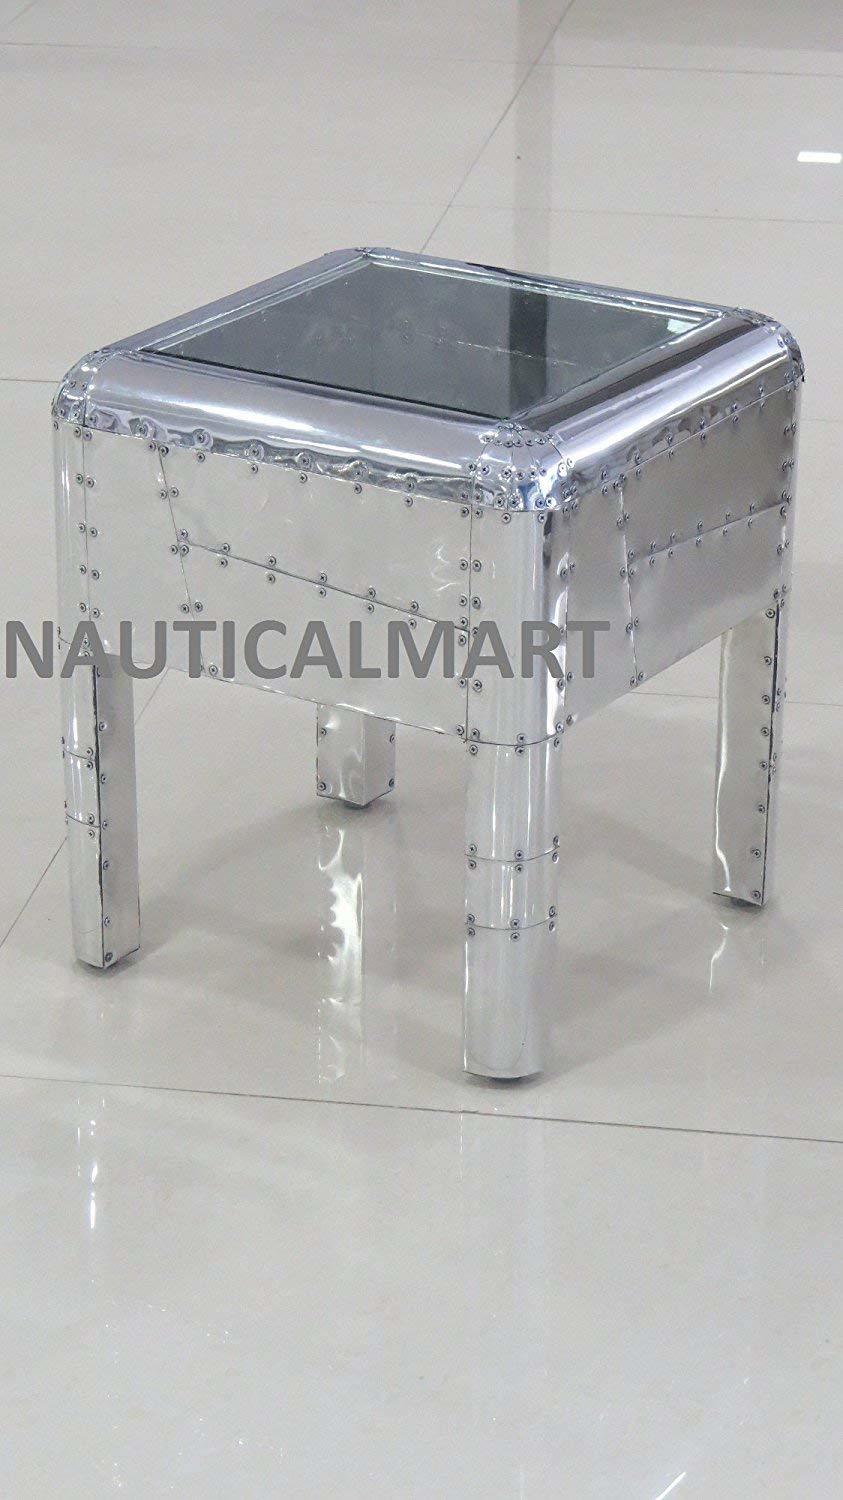 NauticalMart Aviator Retro Side Table Silver Finish End Table Bed Room Decor - $399.00